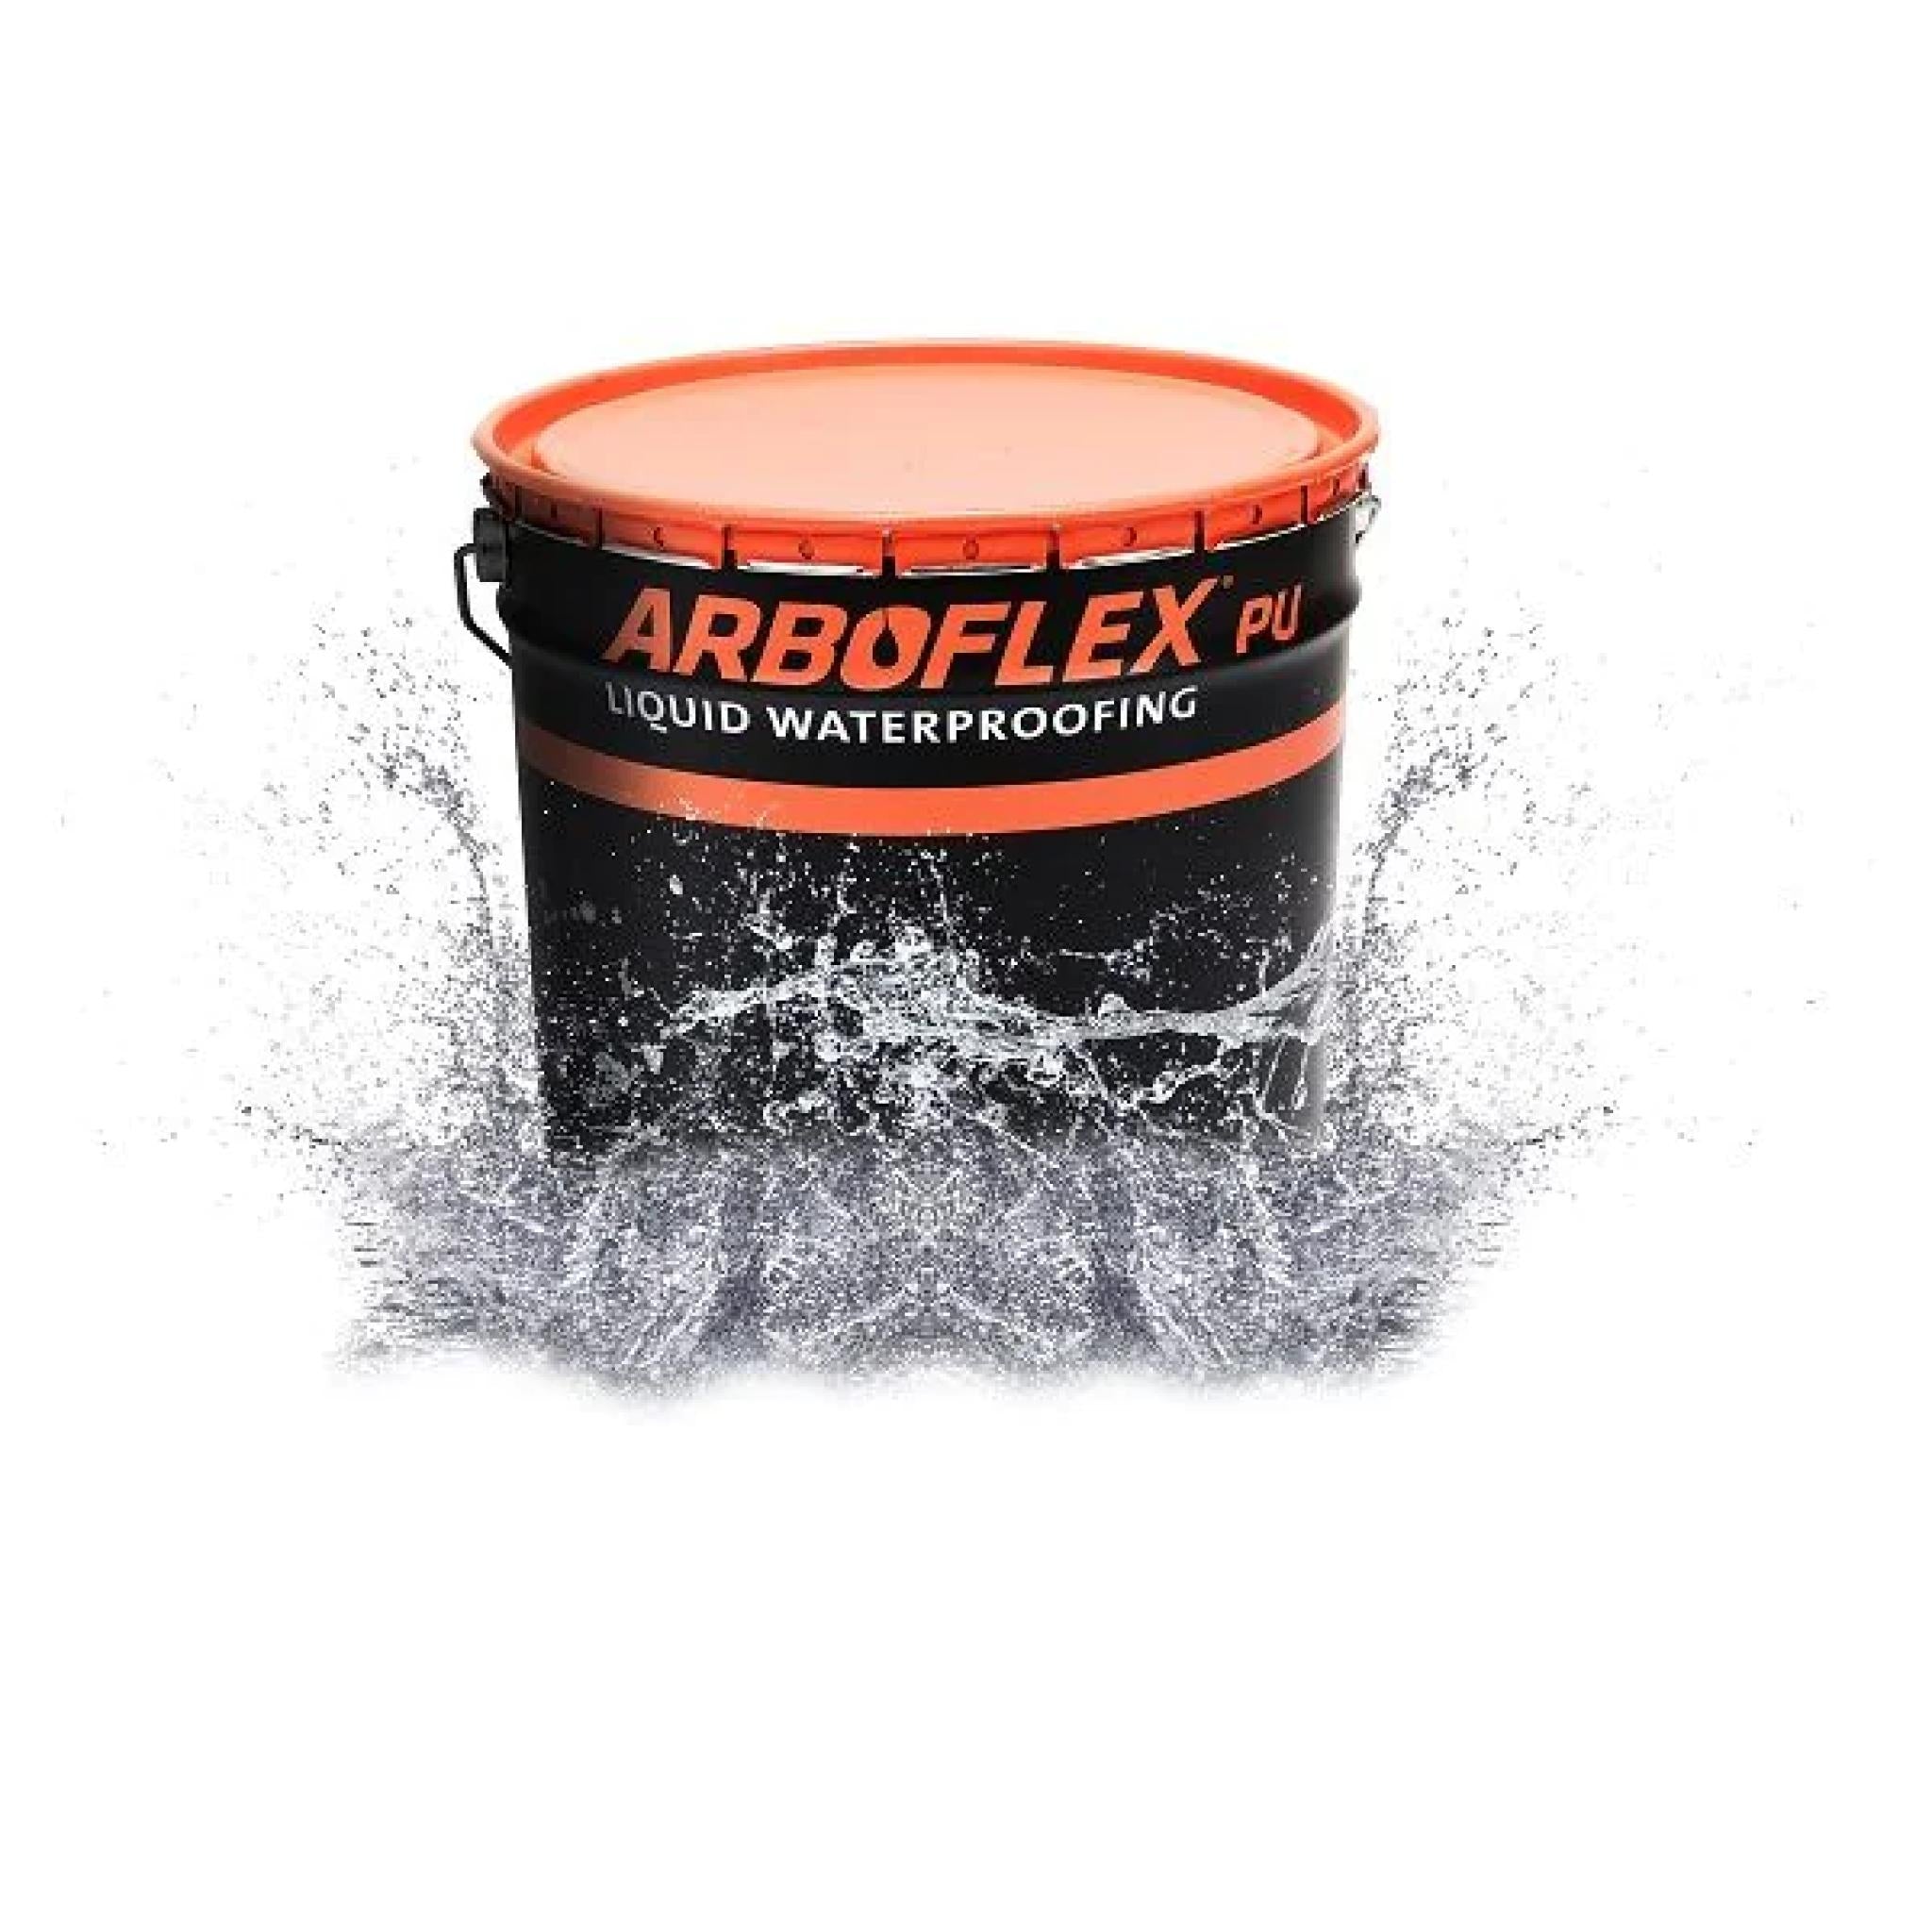 ARBOFLEX PU Liquid Waterproofing